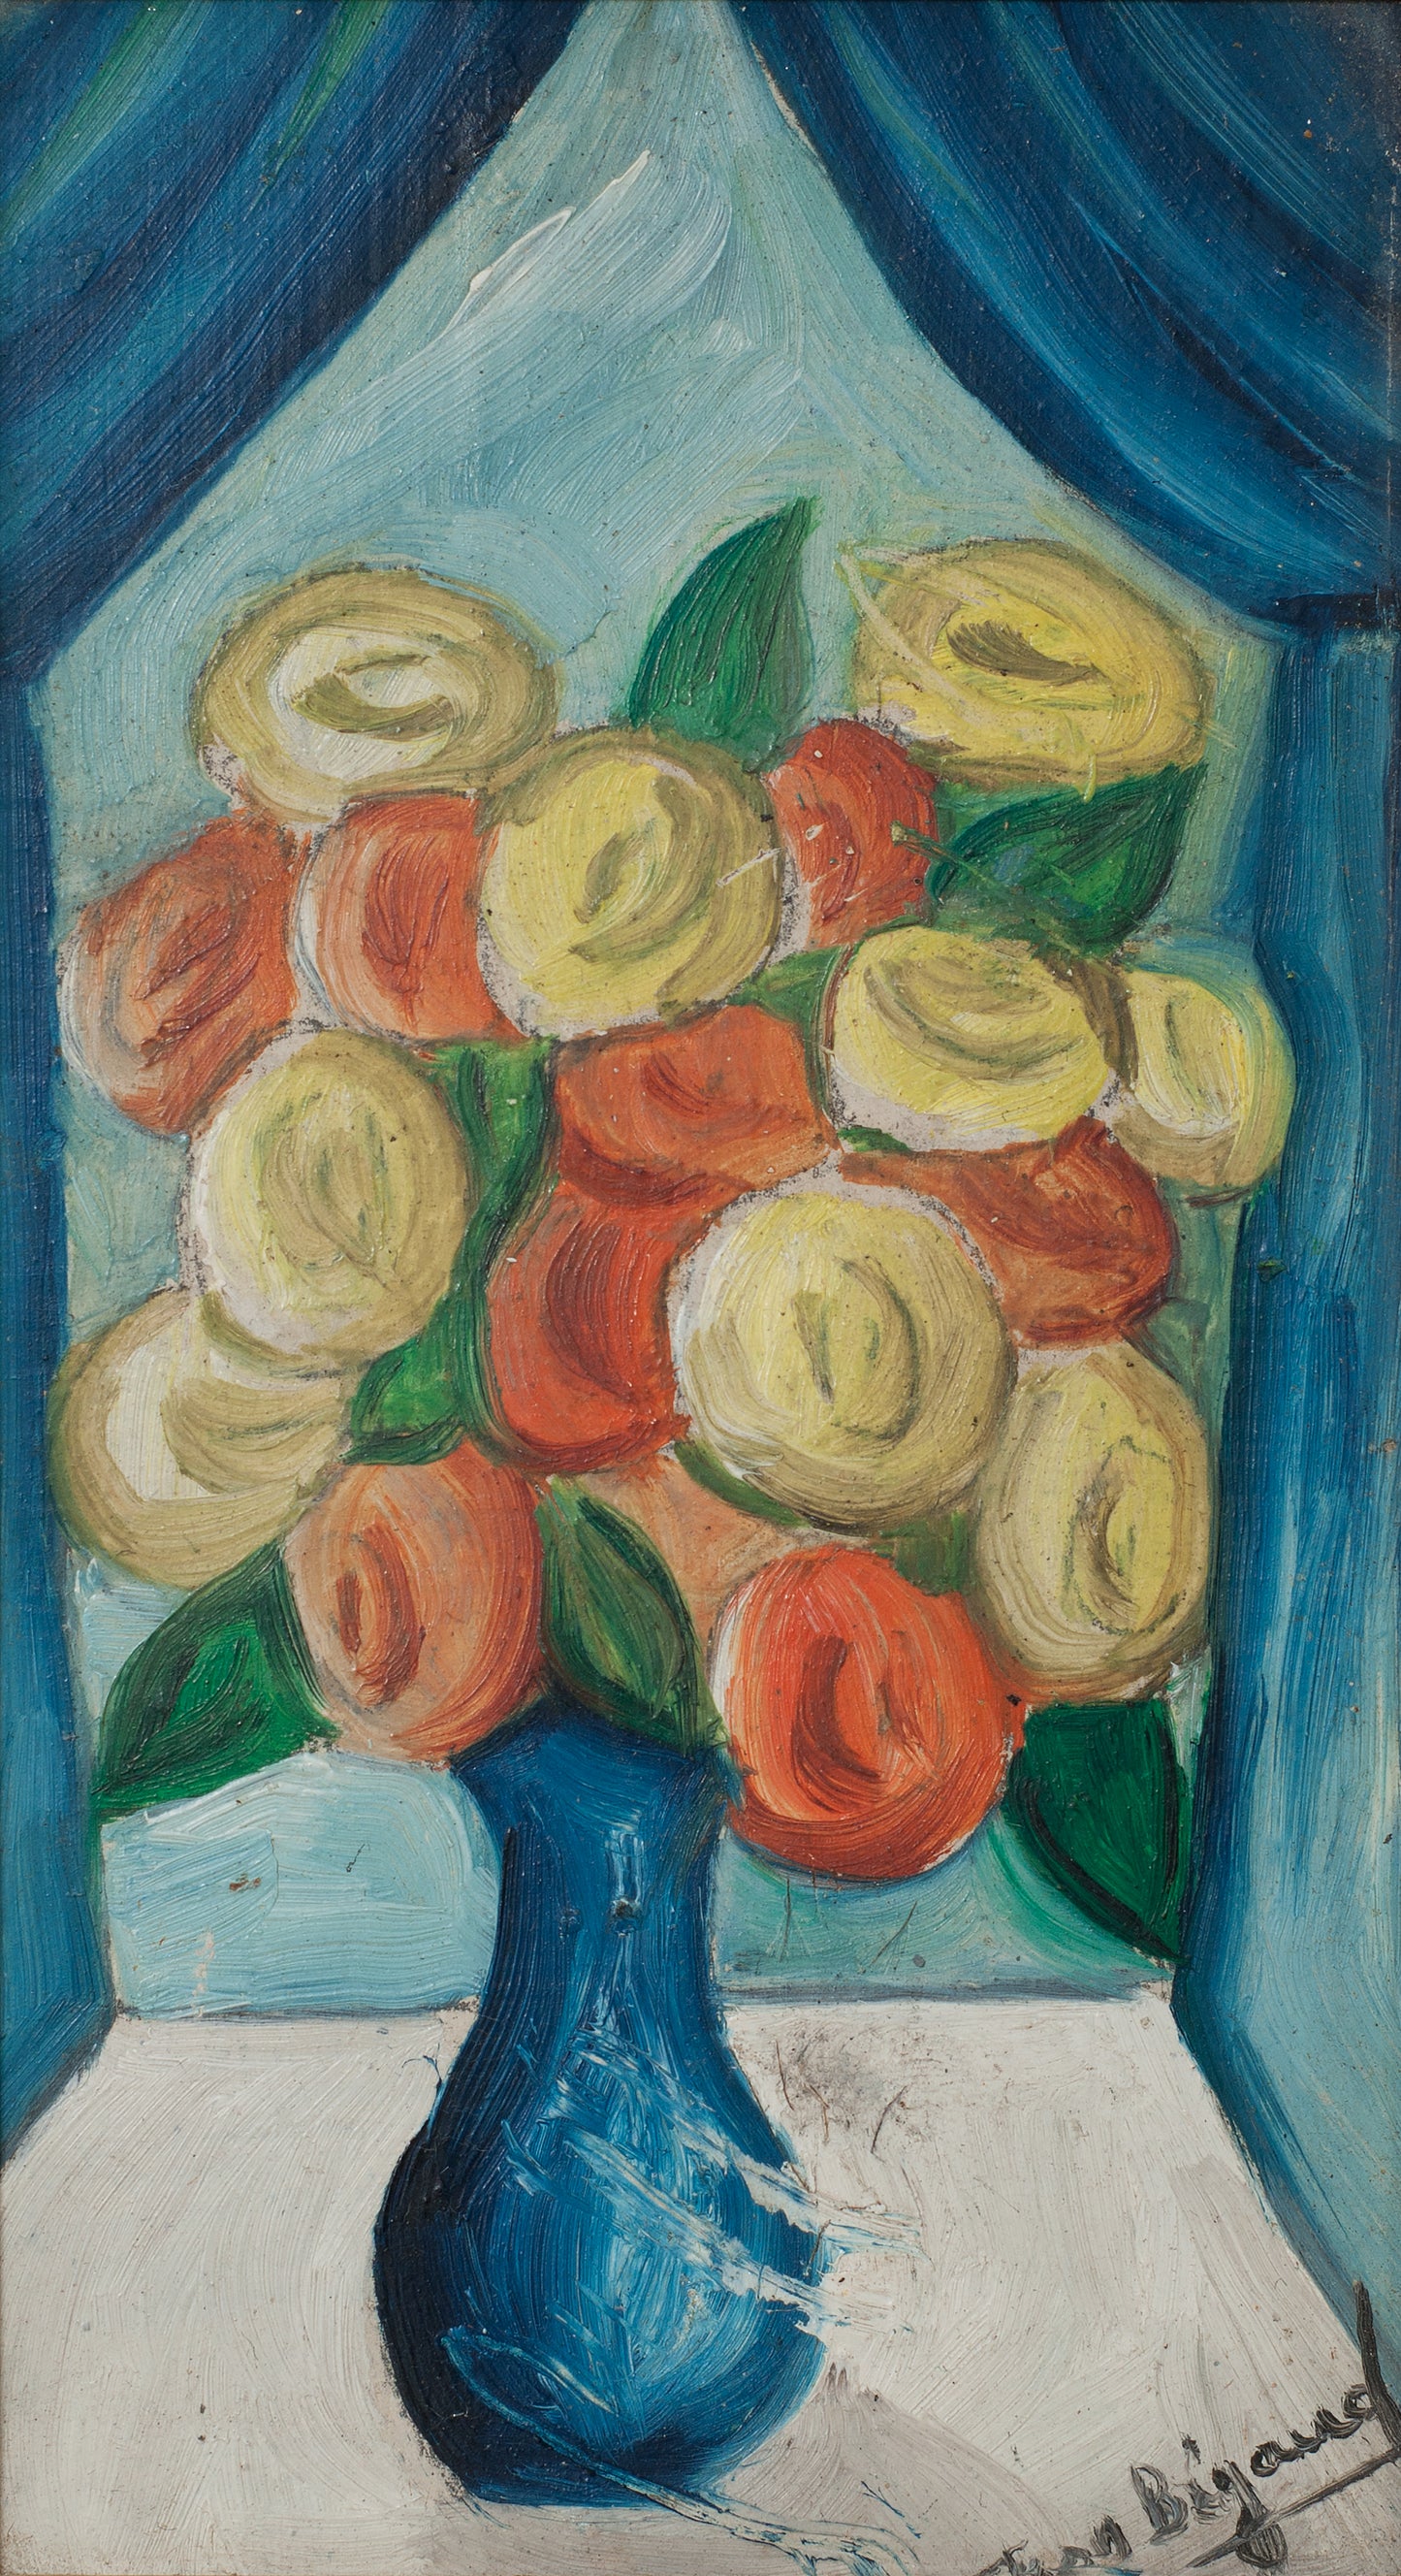 Wilson Bigaud (Haitian, 1931-2010) 6"x3" Vase of Flowers c1970 Oil on Board Unframed Painting #18-1-93GSN-Fondation Marie & Georges S. Nader